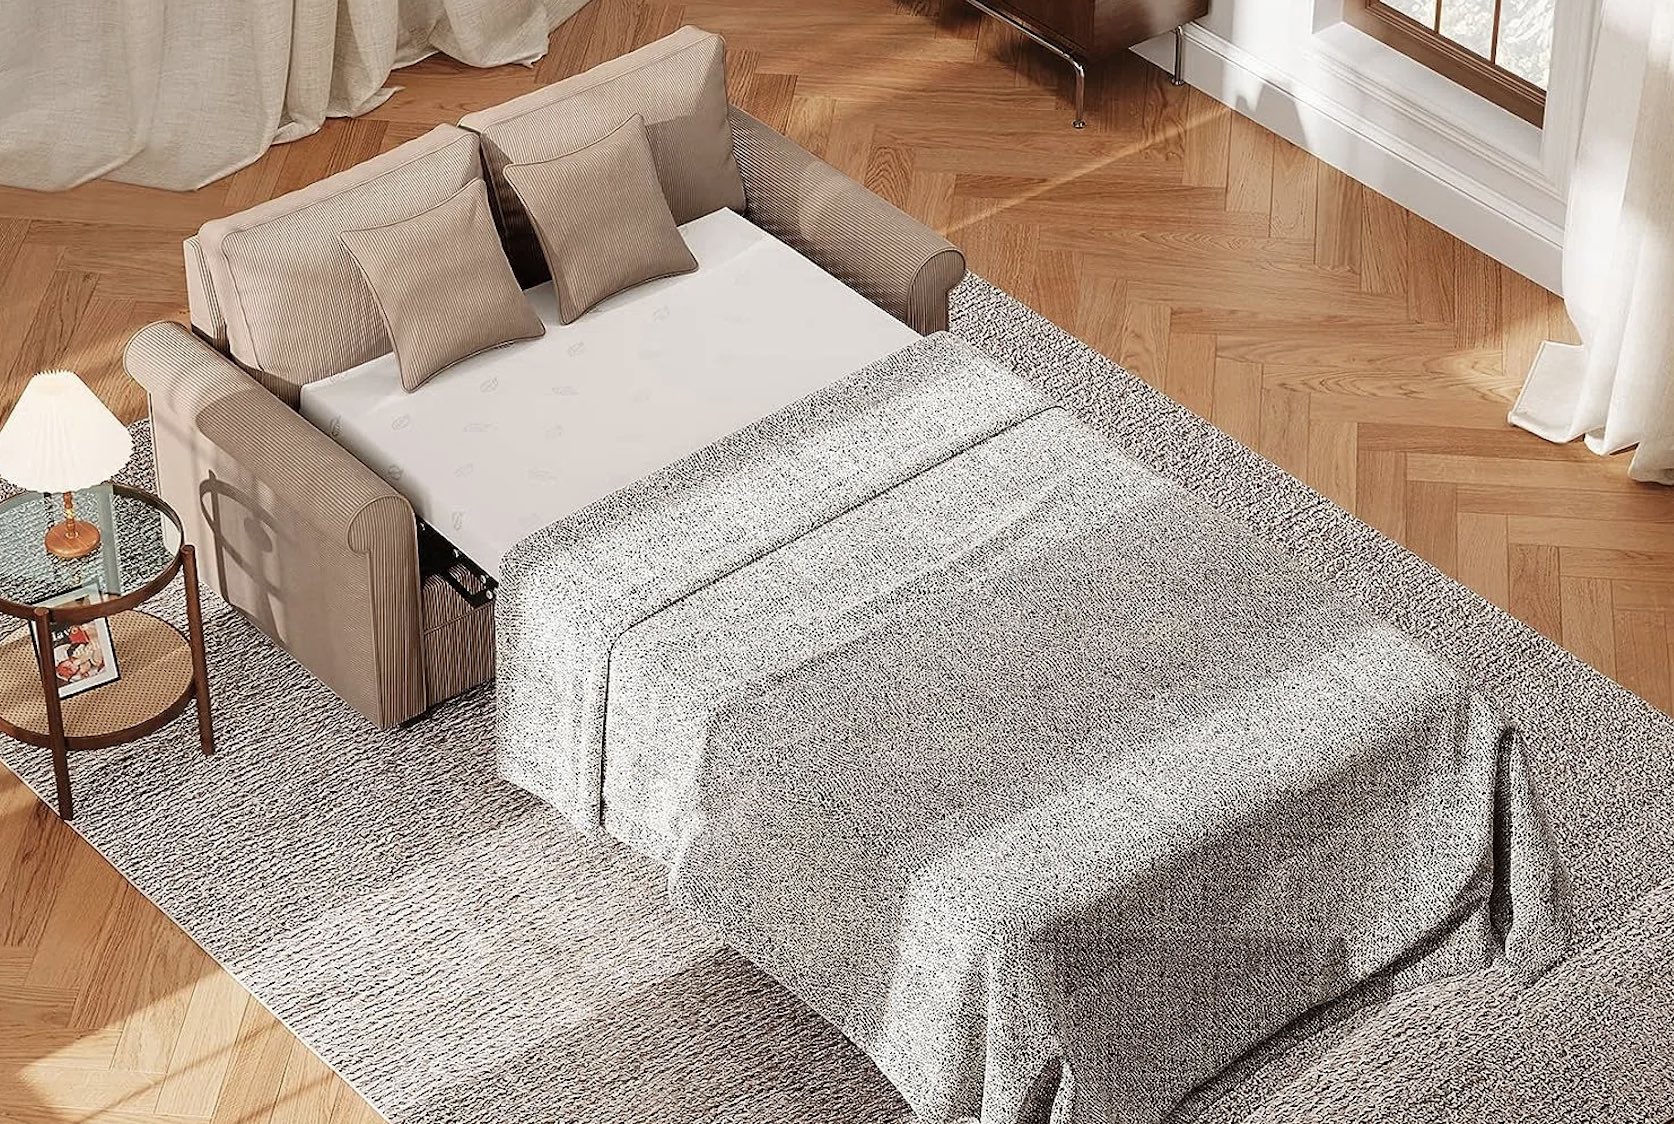 Sleeper Sofa with comfortable Bedding